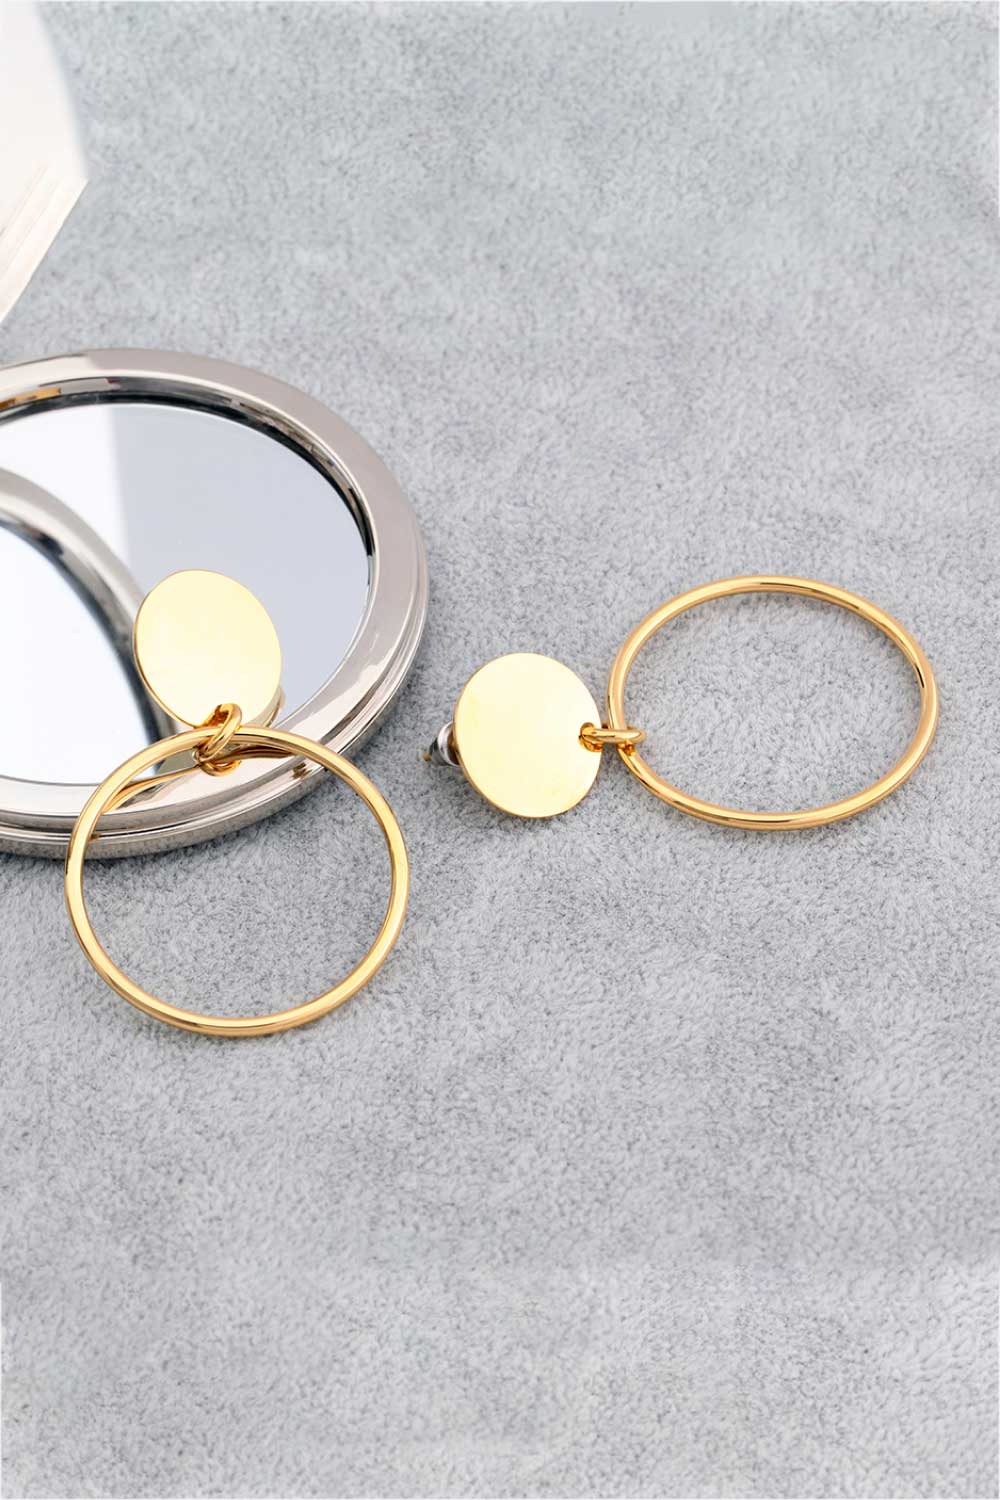 Gold-Plated Stainless Steel Drop Earrings - Earrings - FITGGINS